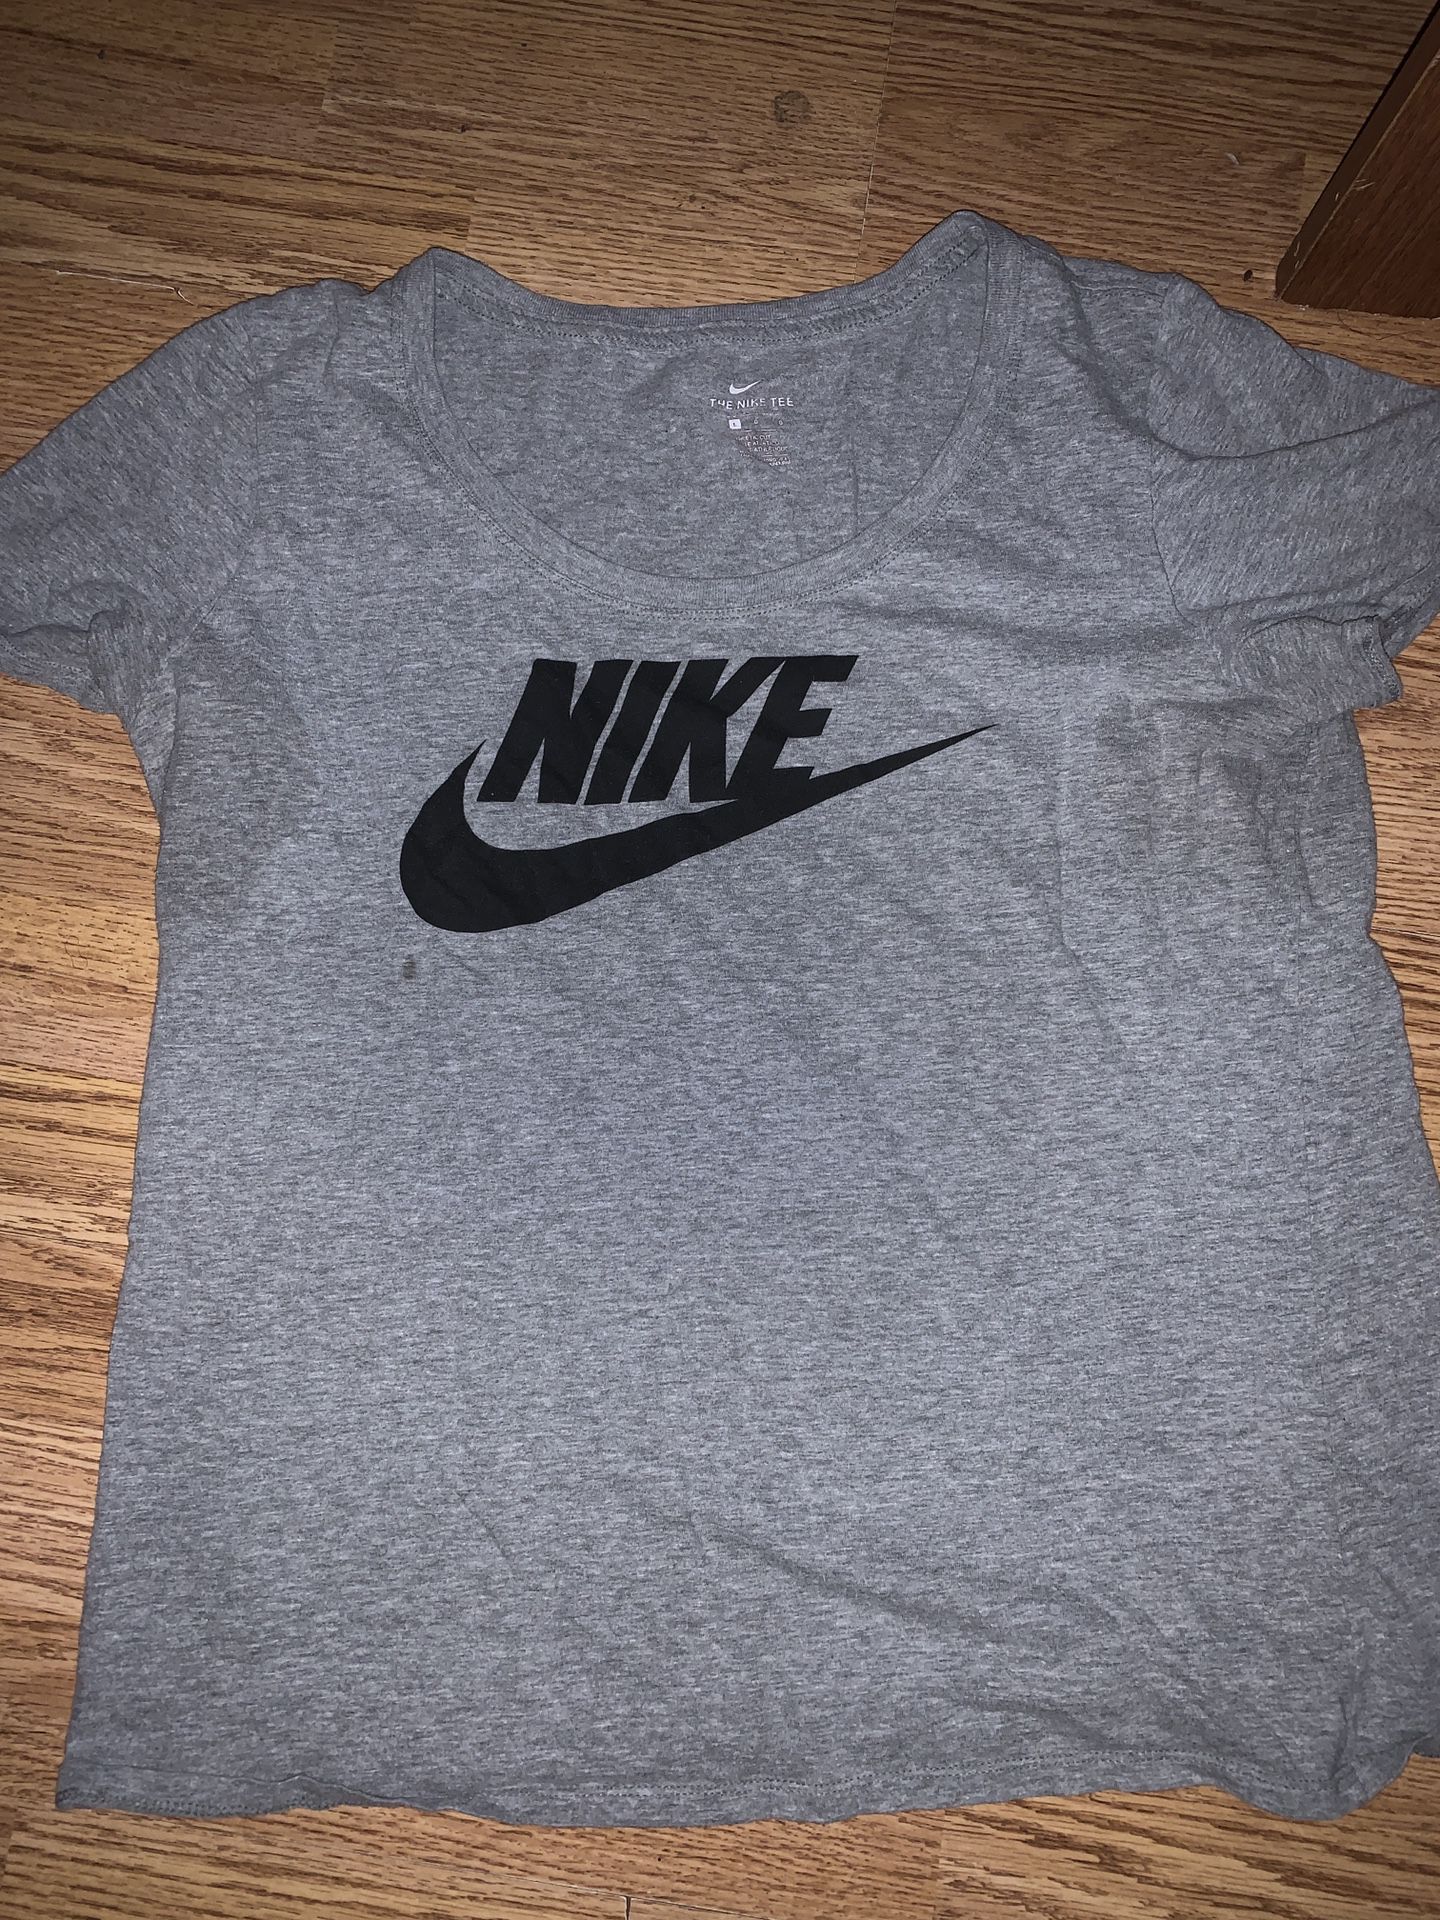 Nike Shirt Womens Size Large